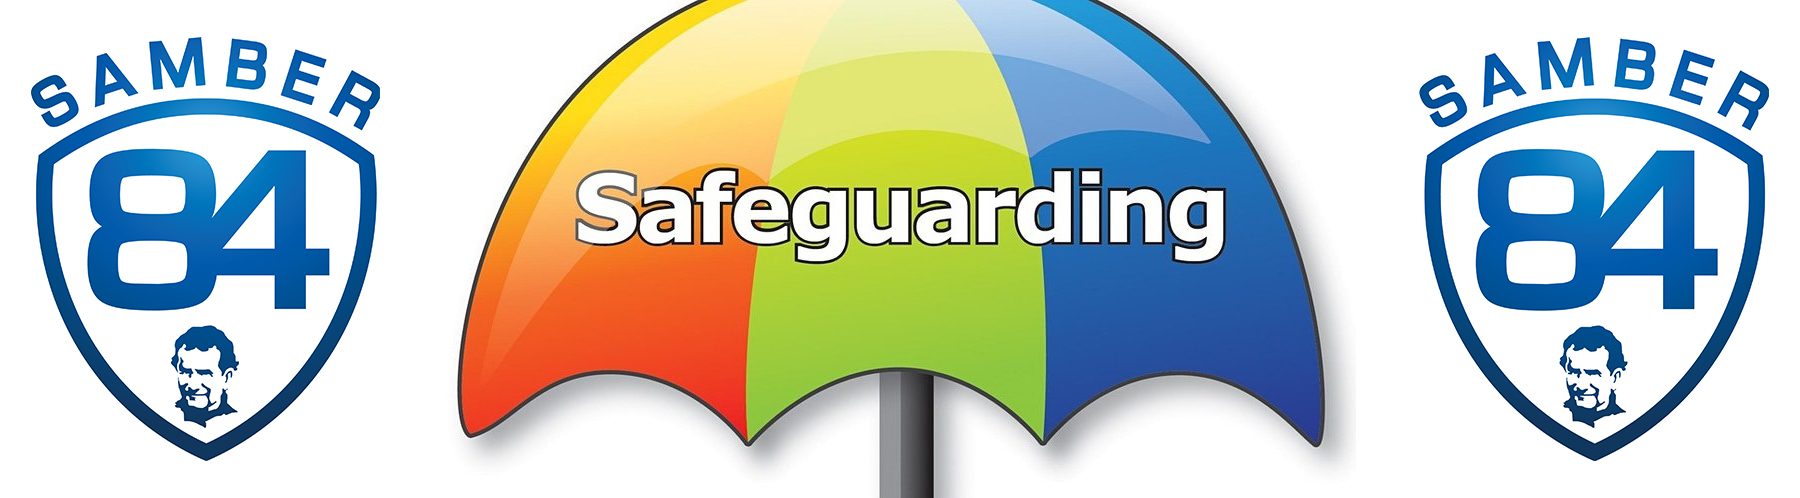 Safeguarding.ico